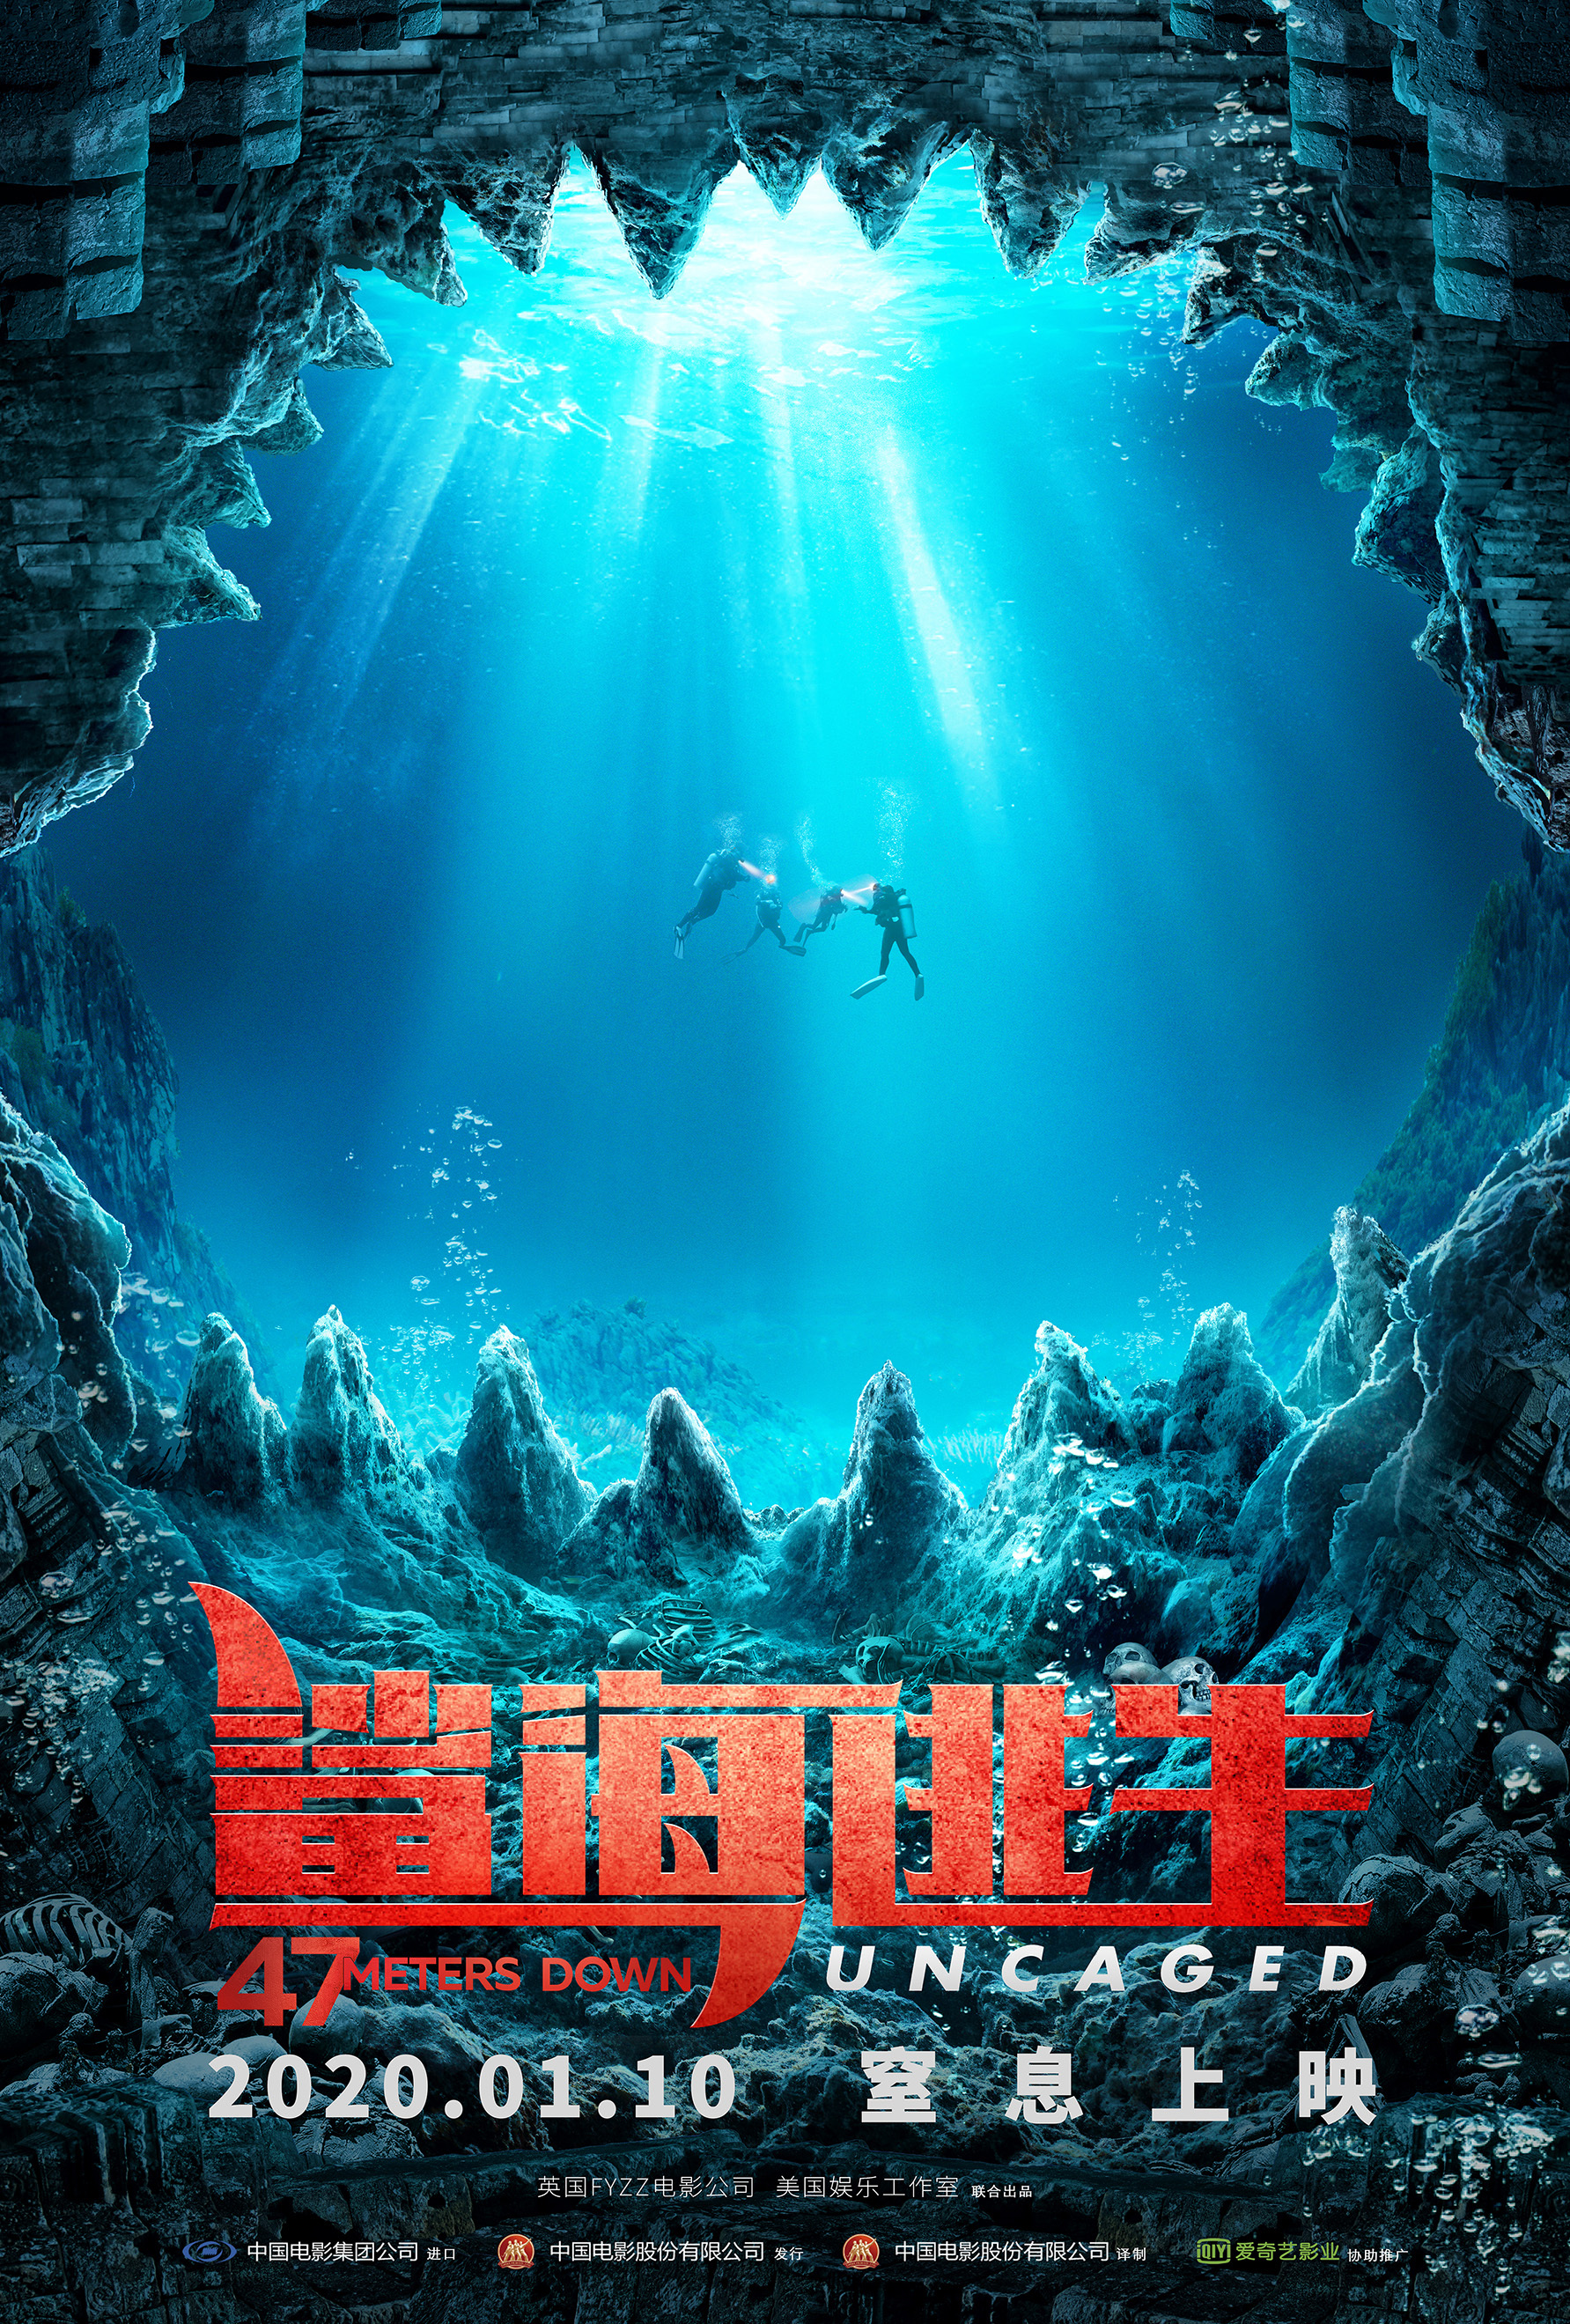 鲨海逃生 47 meters down:uncaged 电影海报